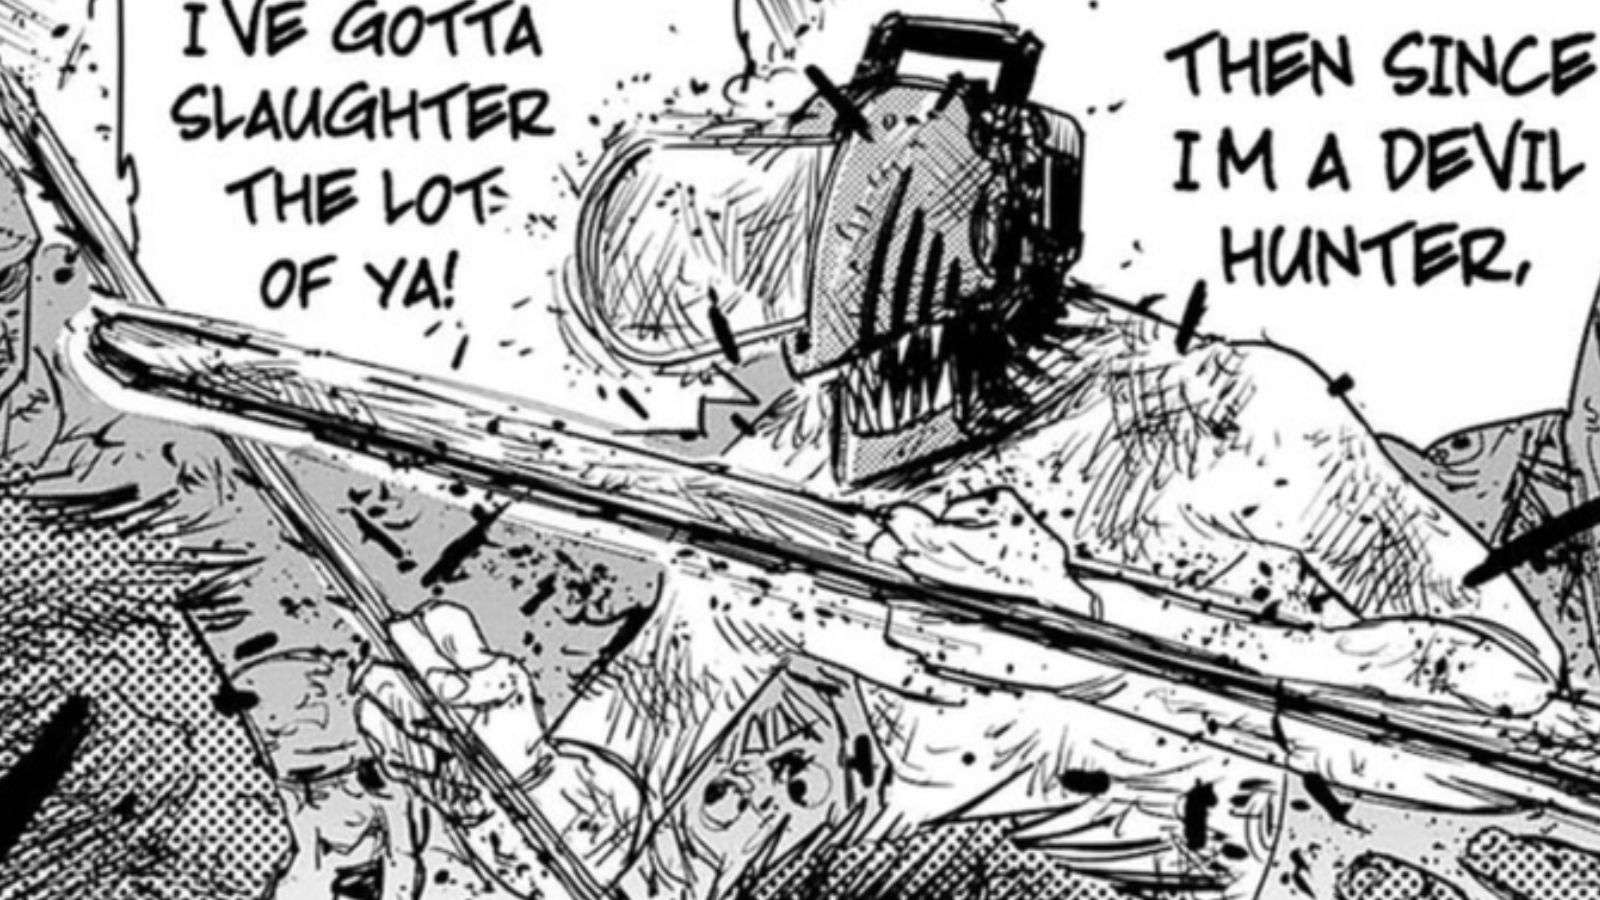 Chainsaw Man manga panel